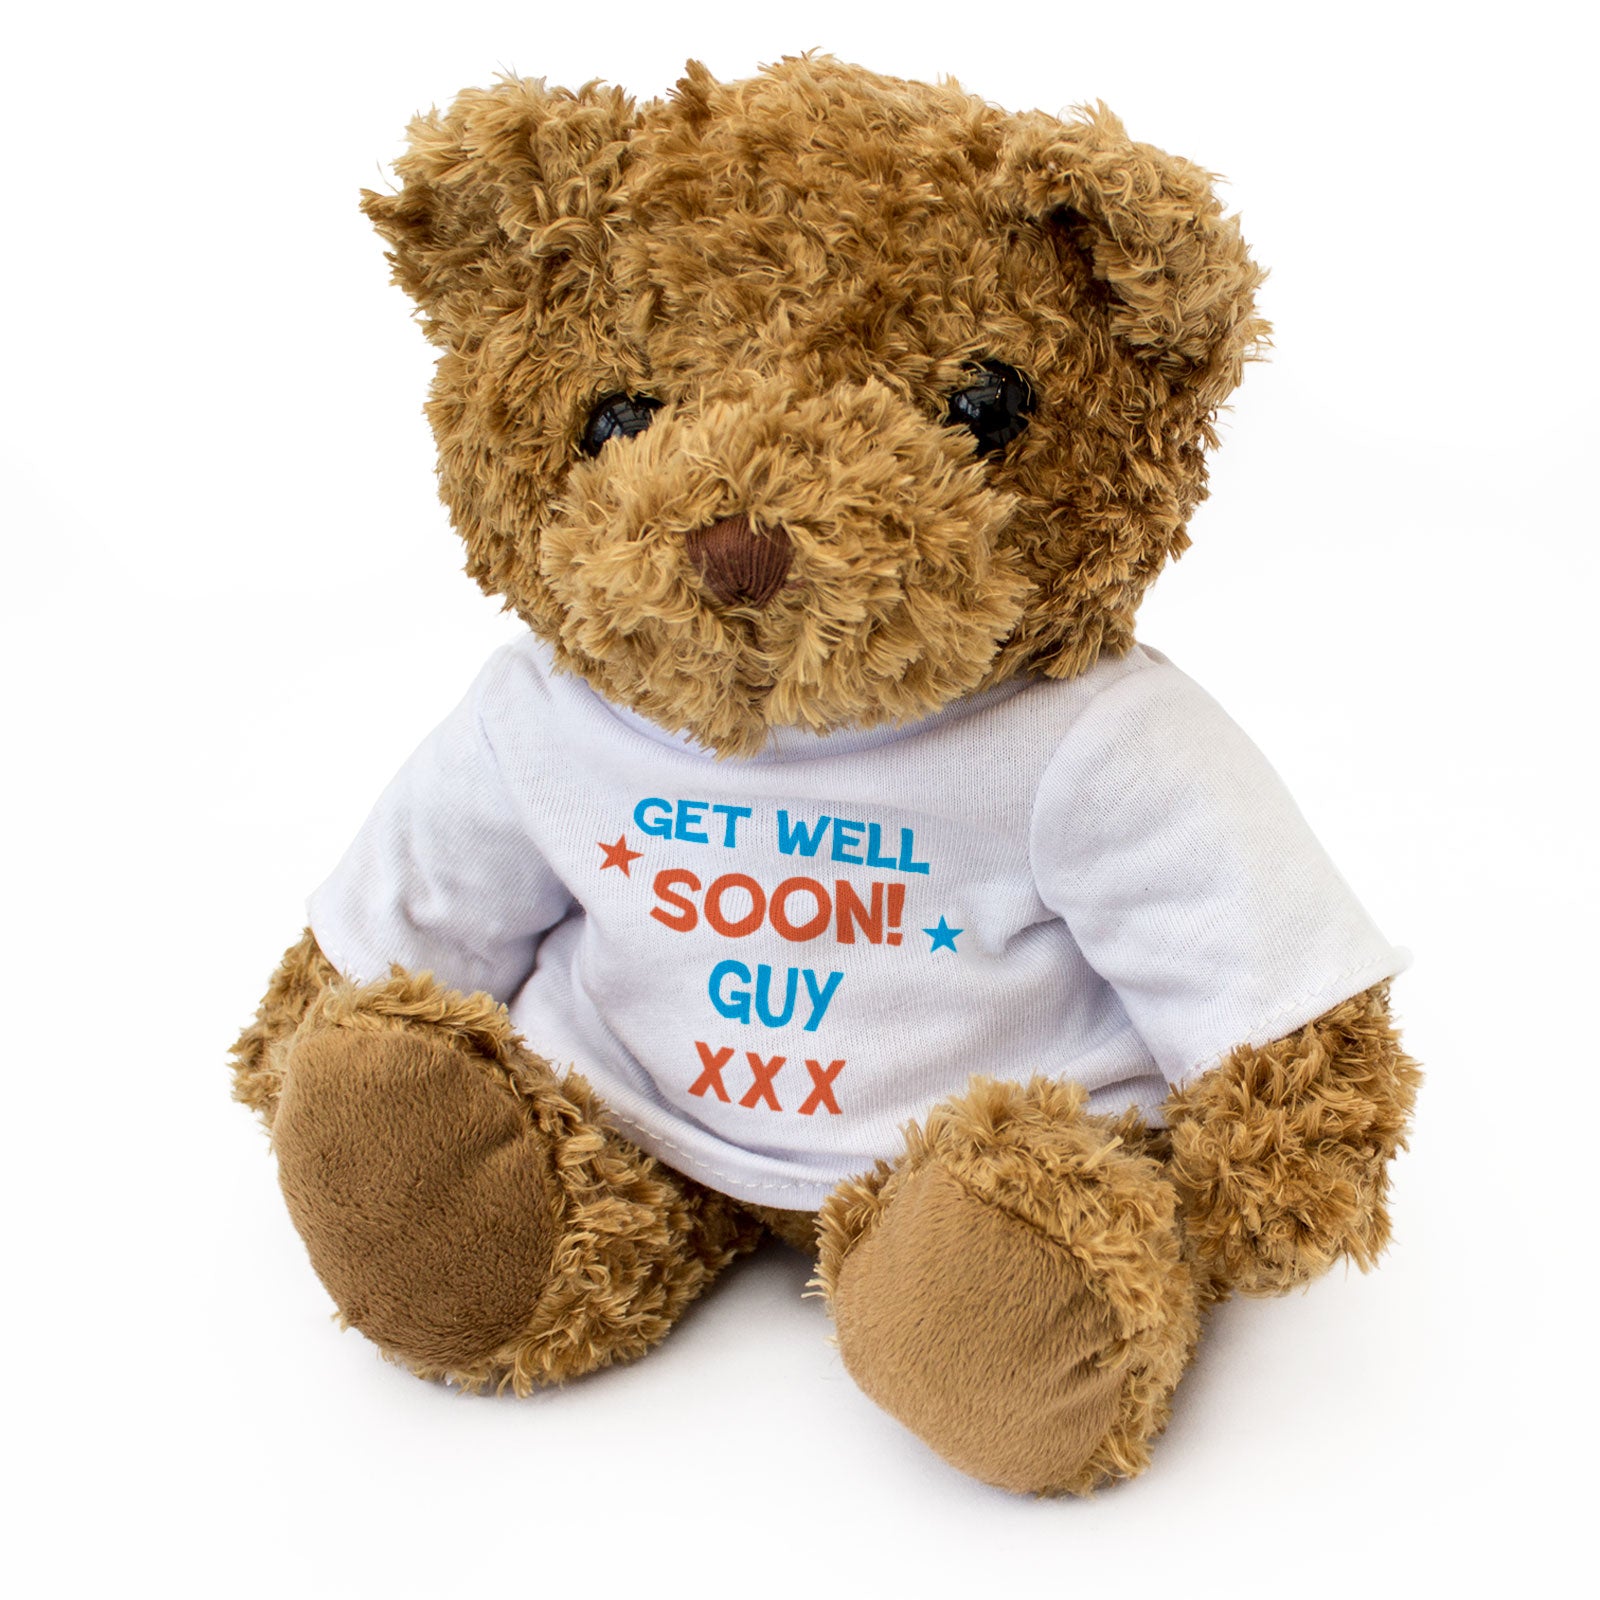 Get Well Soon Guy - Teddy Bear